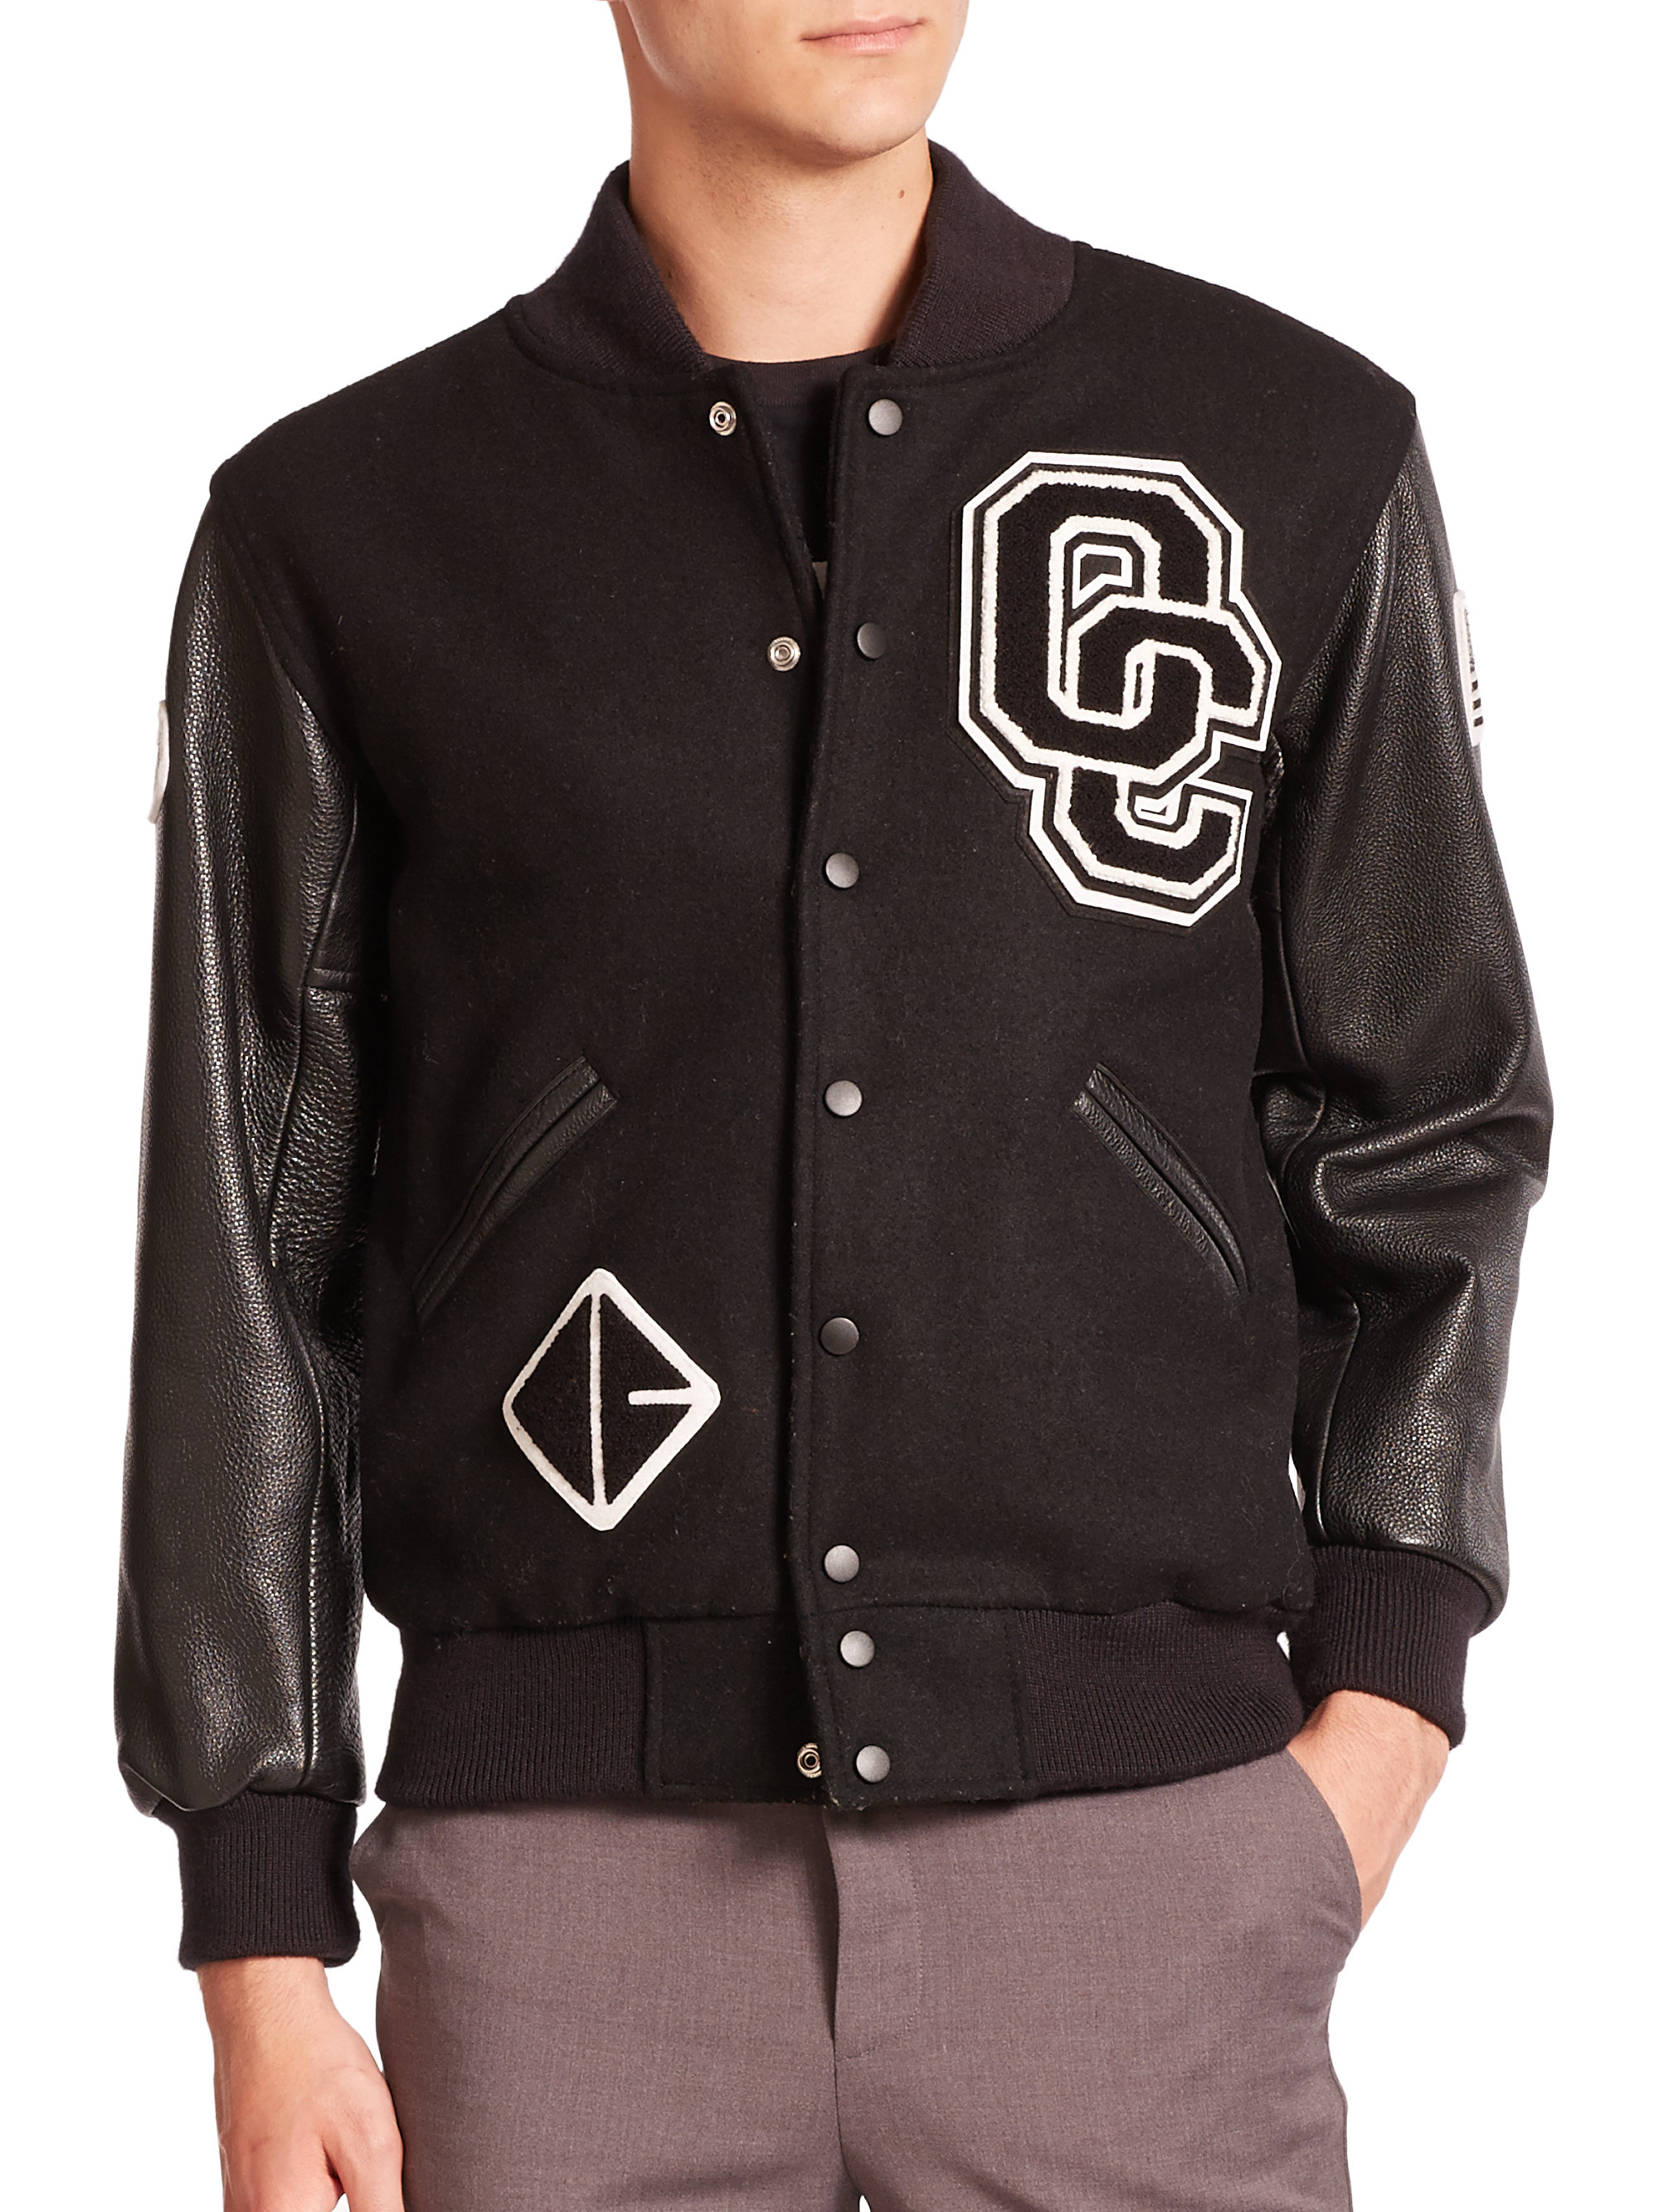 Opening ceremony Logo Leather-sleeve Varsity Jacket in Black for Men | Lyst